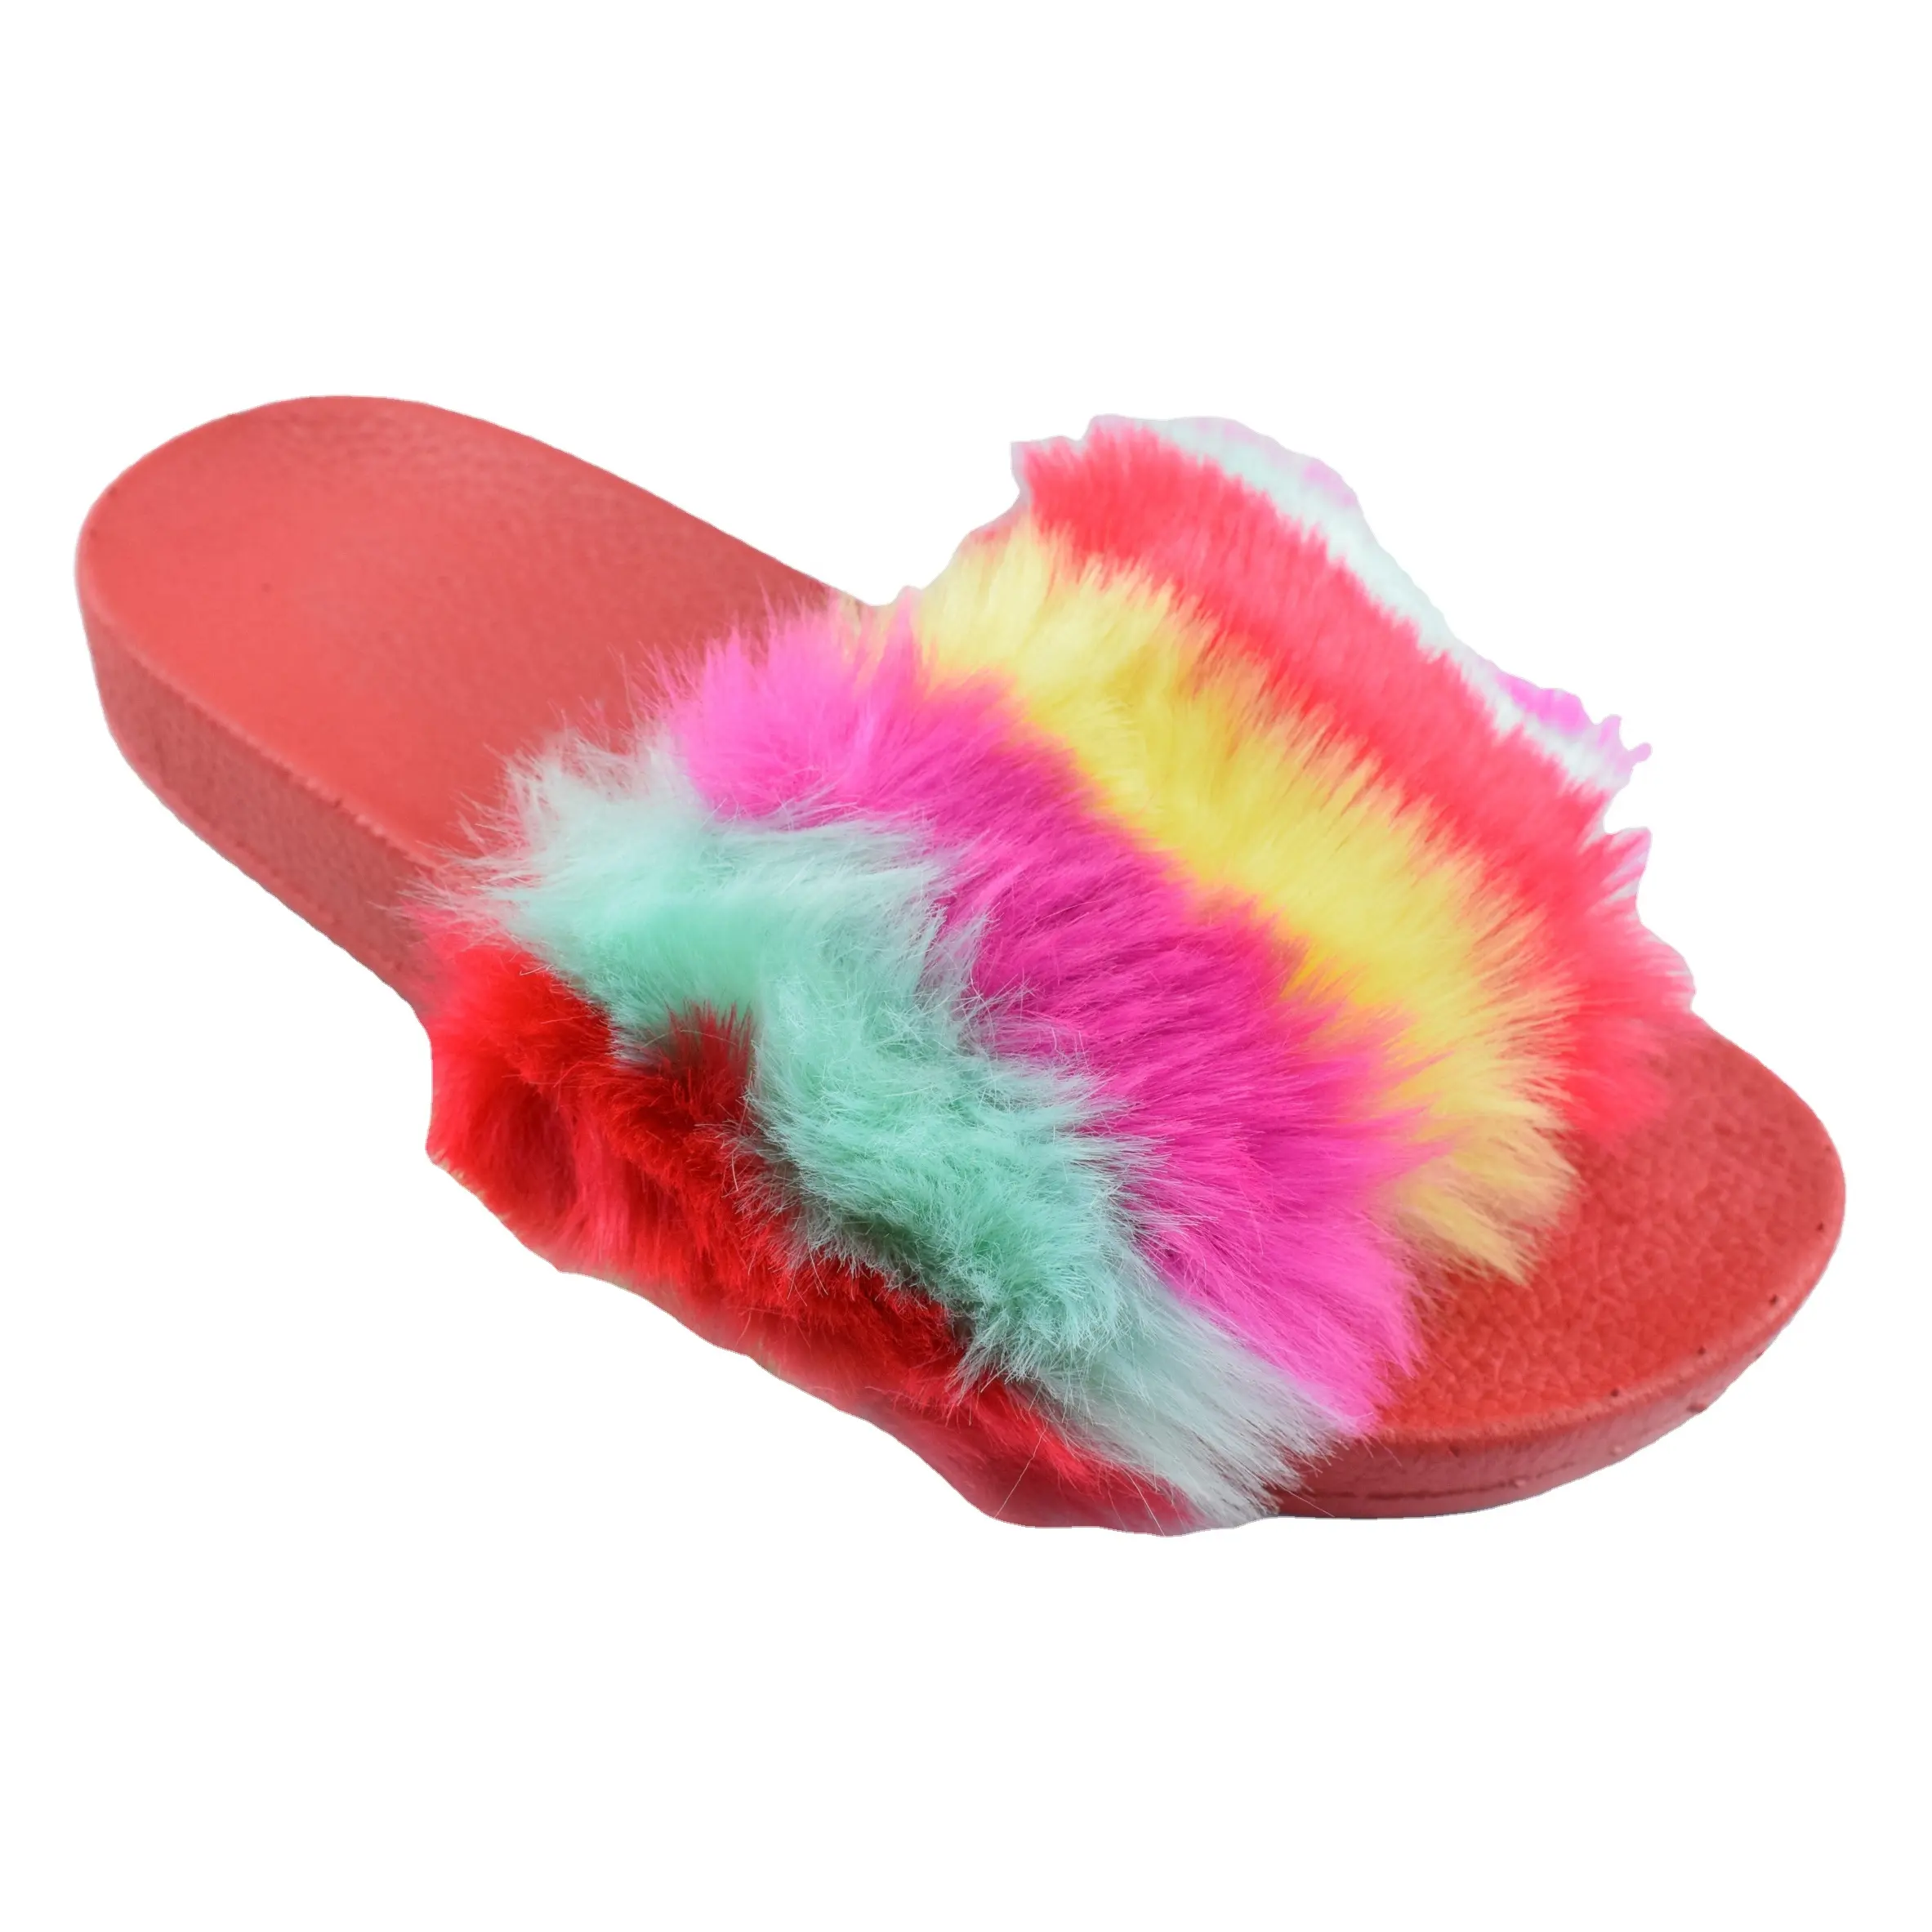 Colorful Palsu Bulu Slide untuk Wanita Bulu Imitasi Slider Sandal Wanita, Grosir Bulu Imitasi Sandal Slider